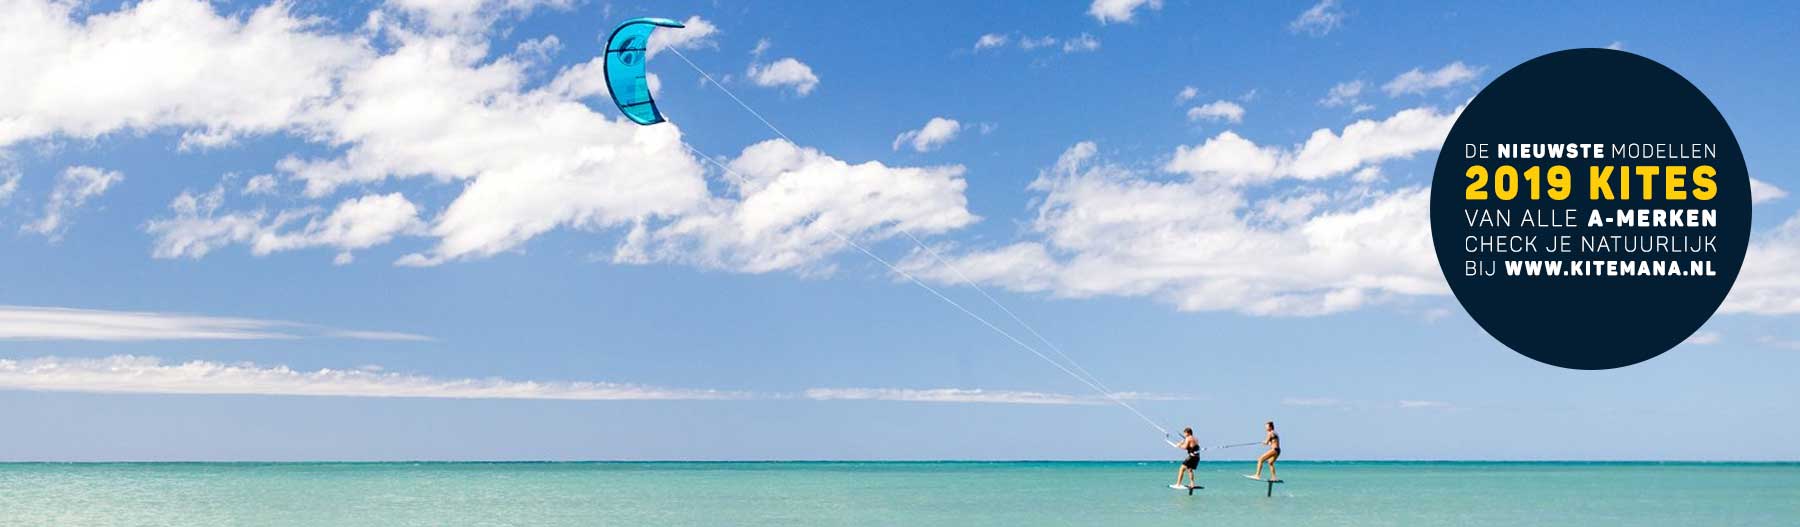 2019 kites en kiteboards